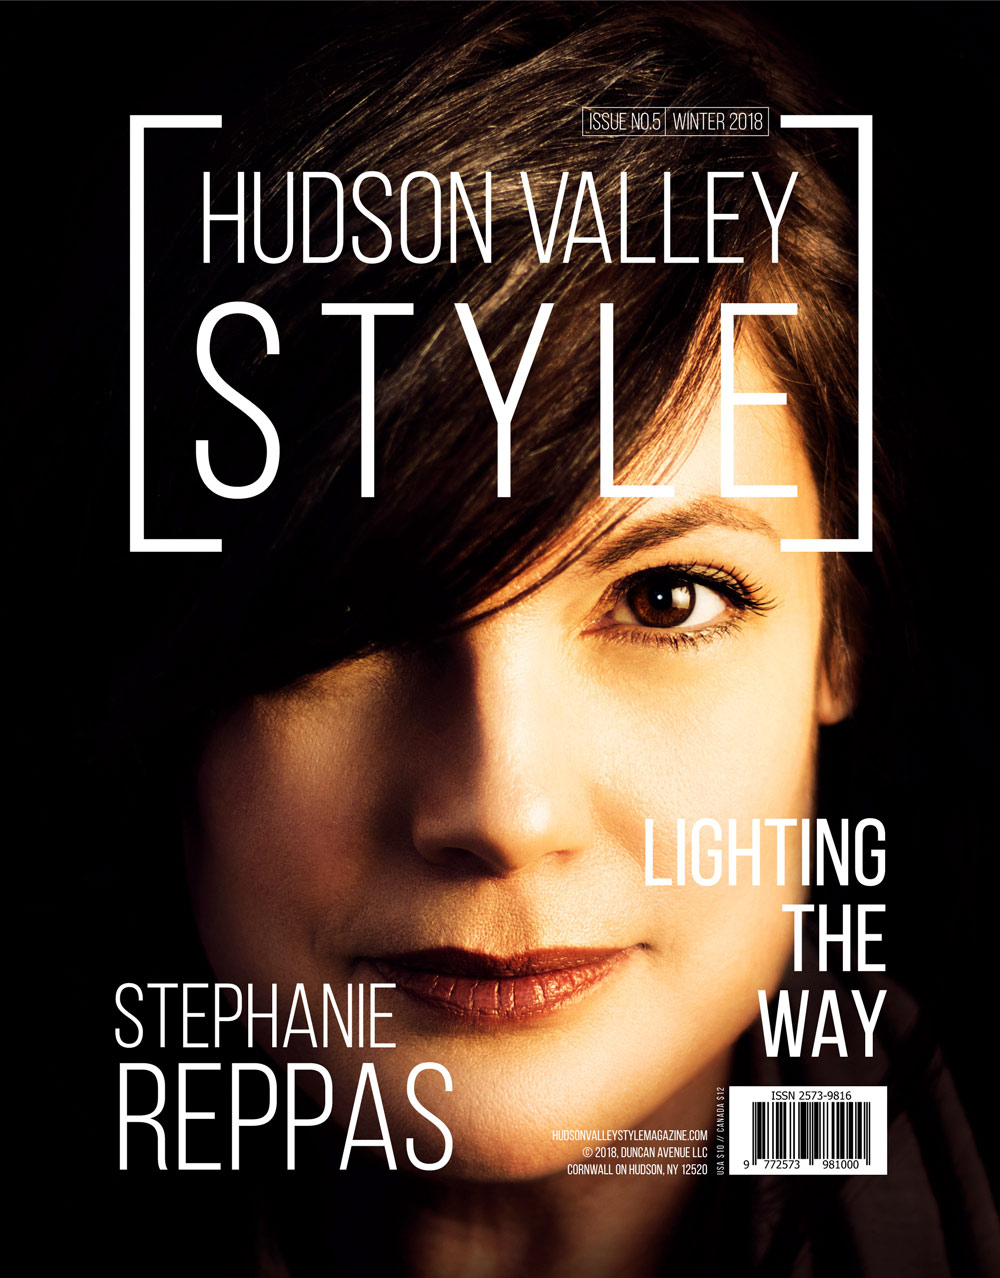 Lighting the Way - Hudson Valley Designer Stephanie Reppas